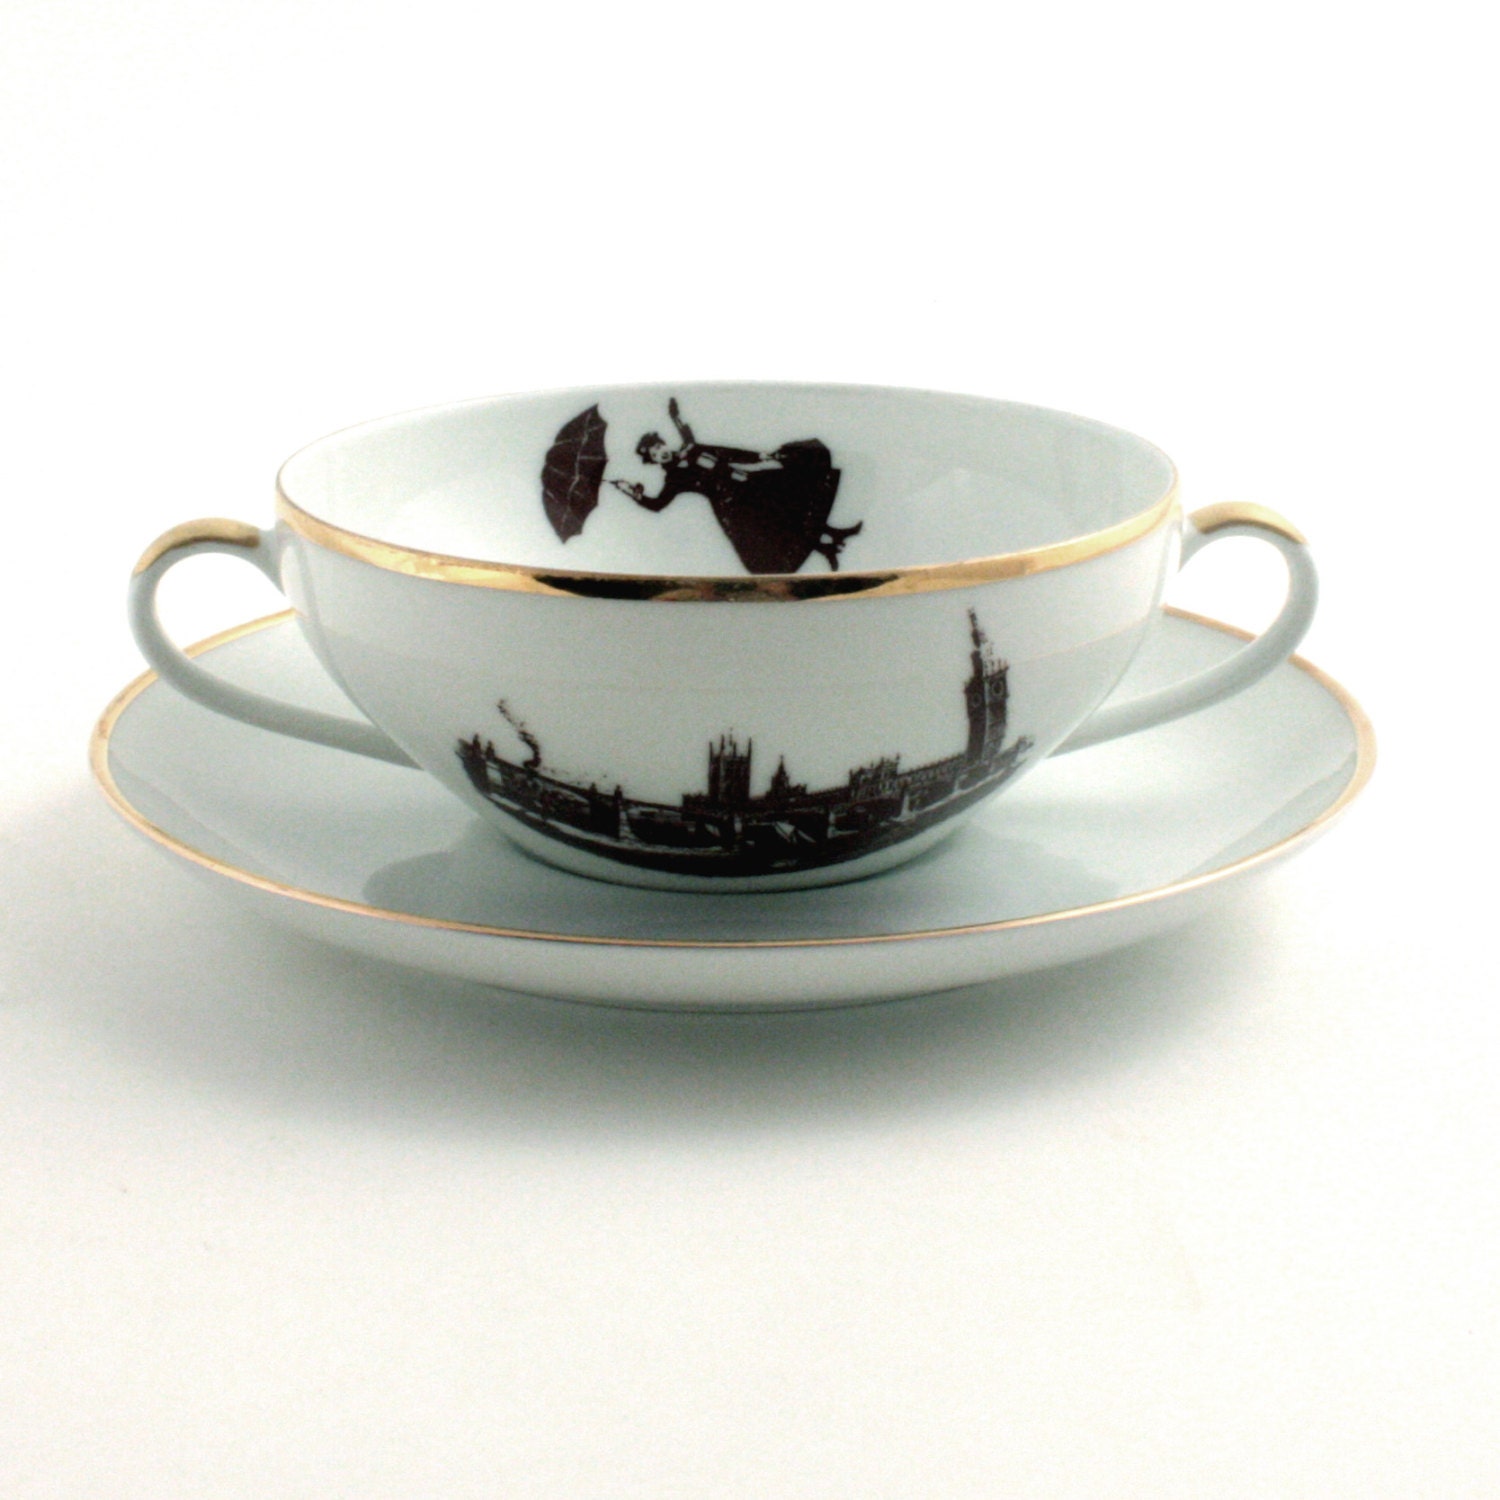 Altered  Mary Poppins Cereal  Mug Soup Bowl Saucer Porcelain Gold Trim London England Big Ben Nanny White Brown Romantic - MoreThanPorcelain